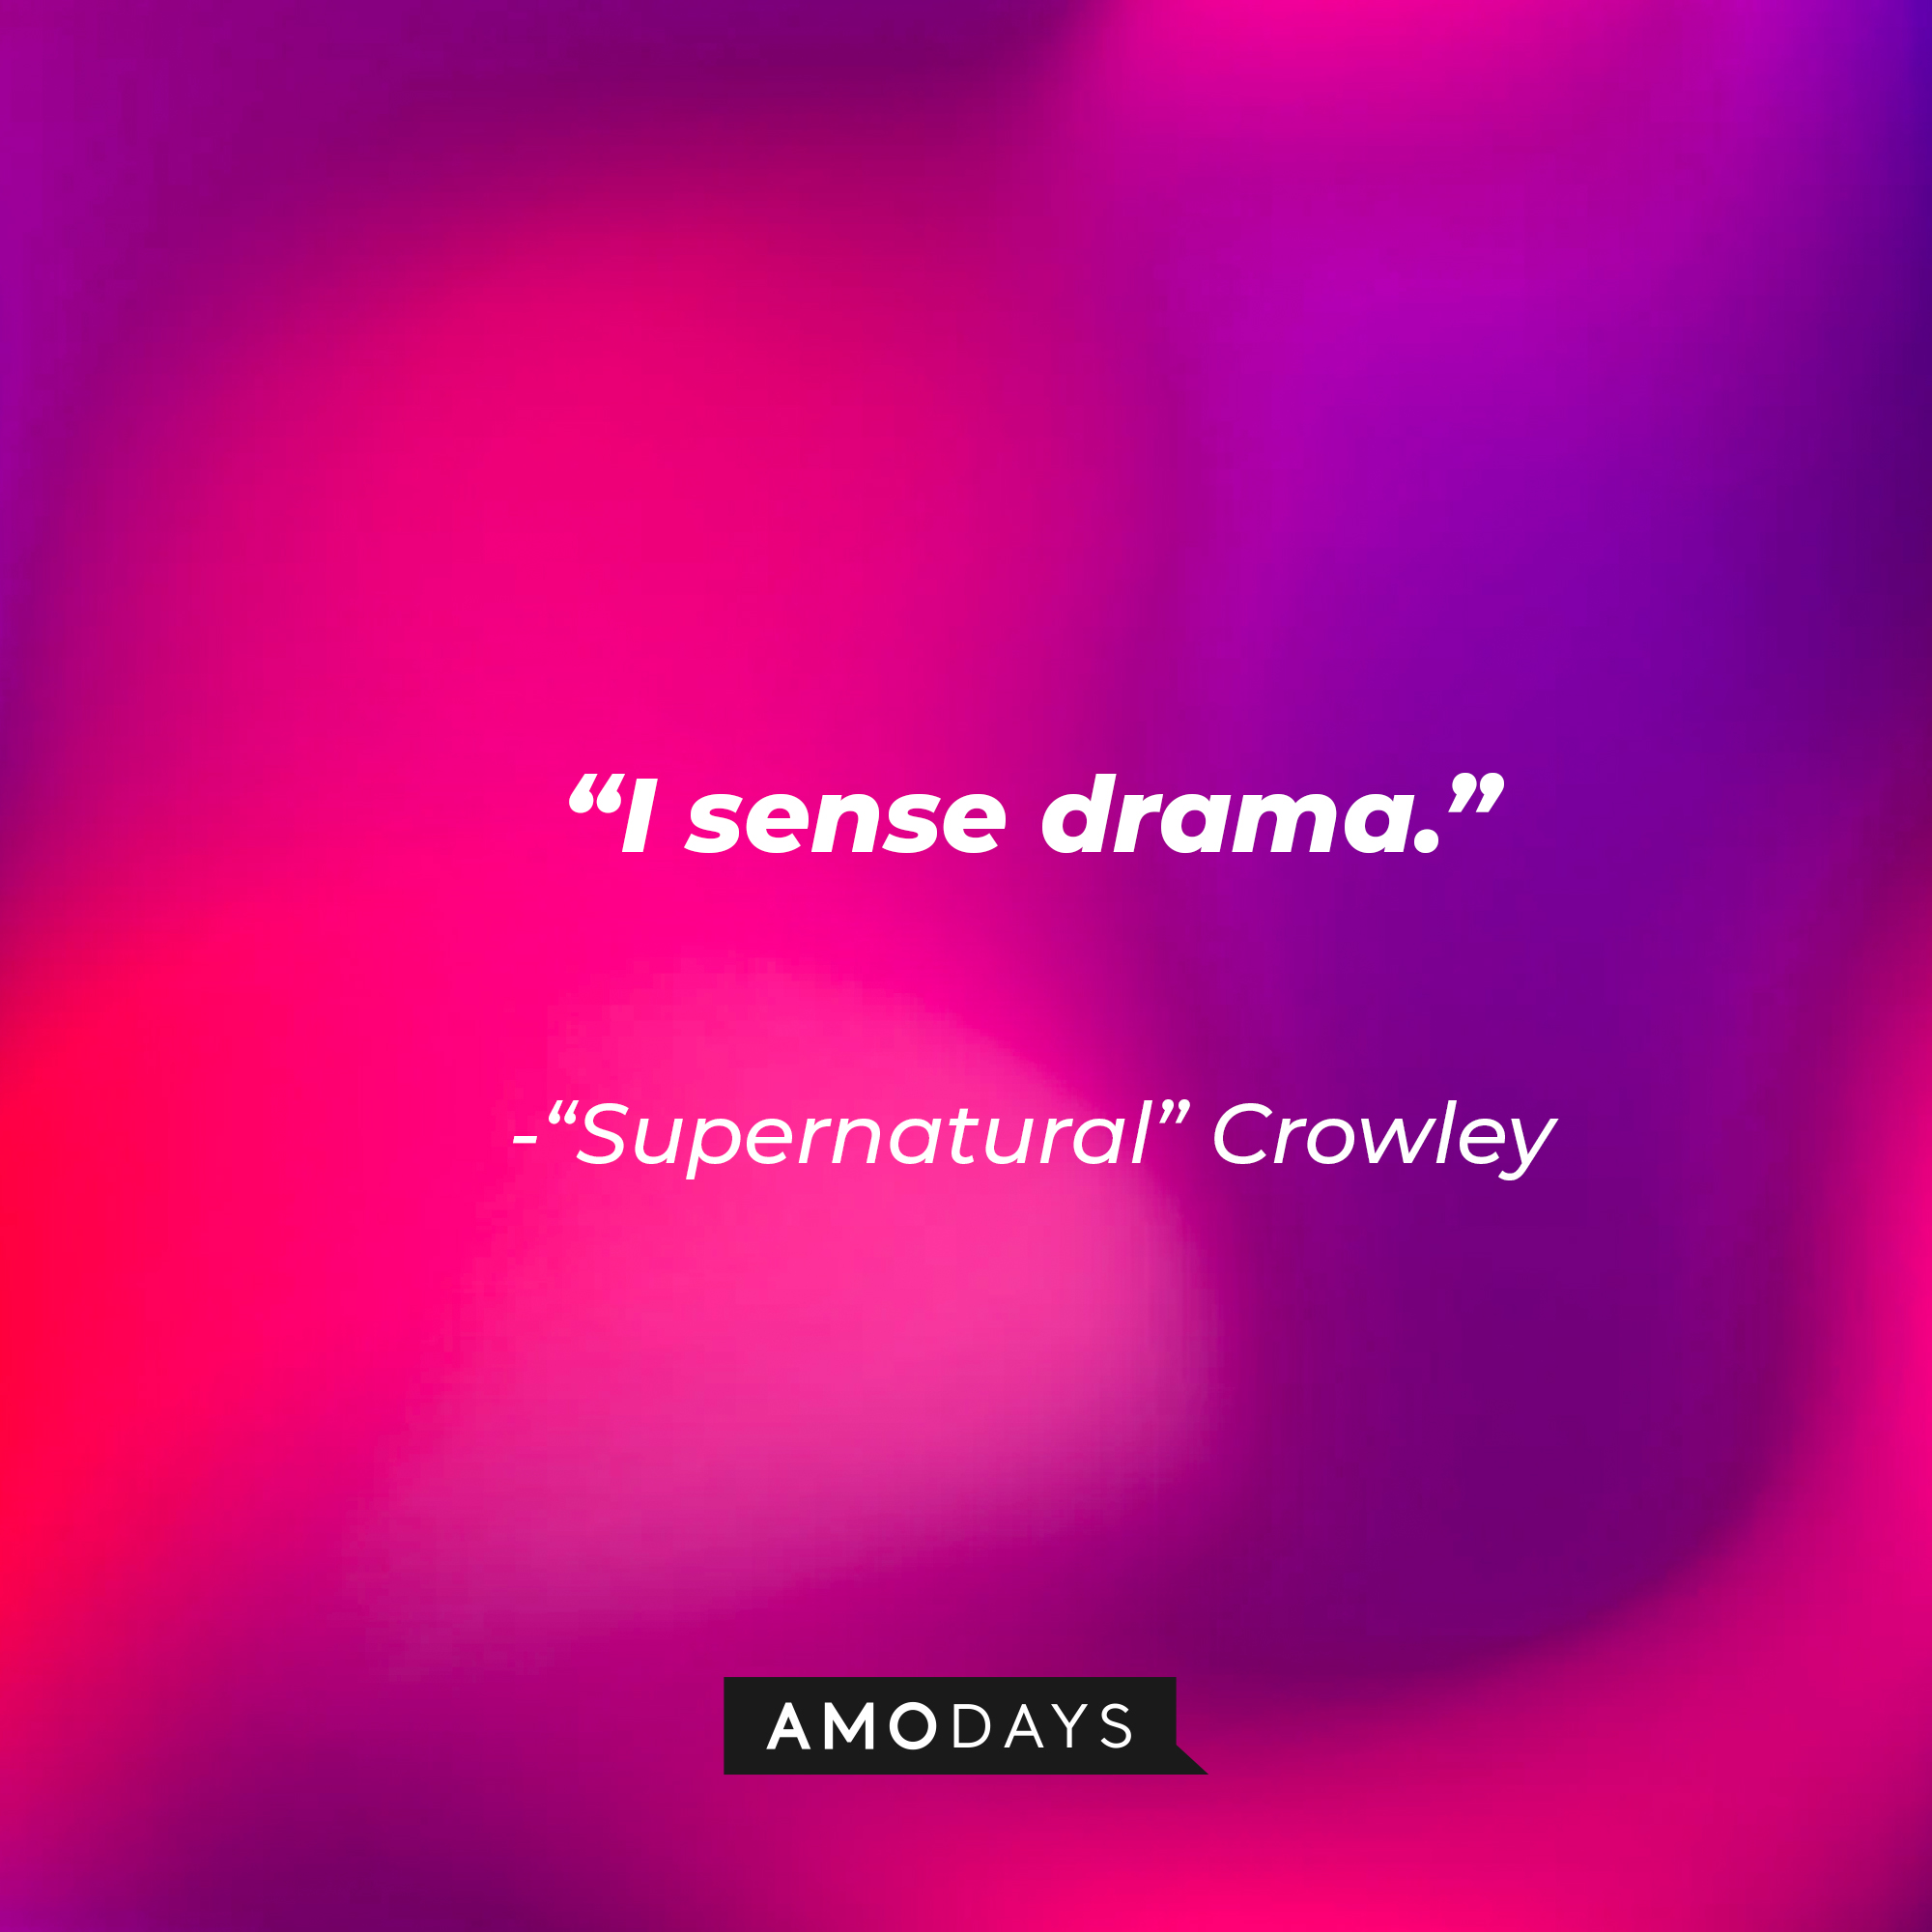 "Supernatural" Crowley's quote: "I sense drama." | Source: AmoDays